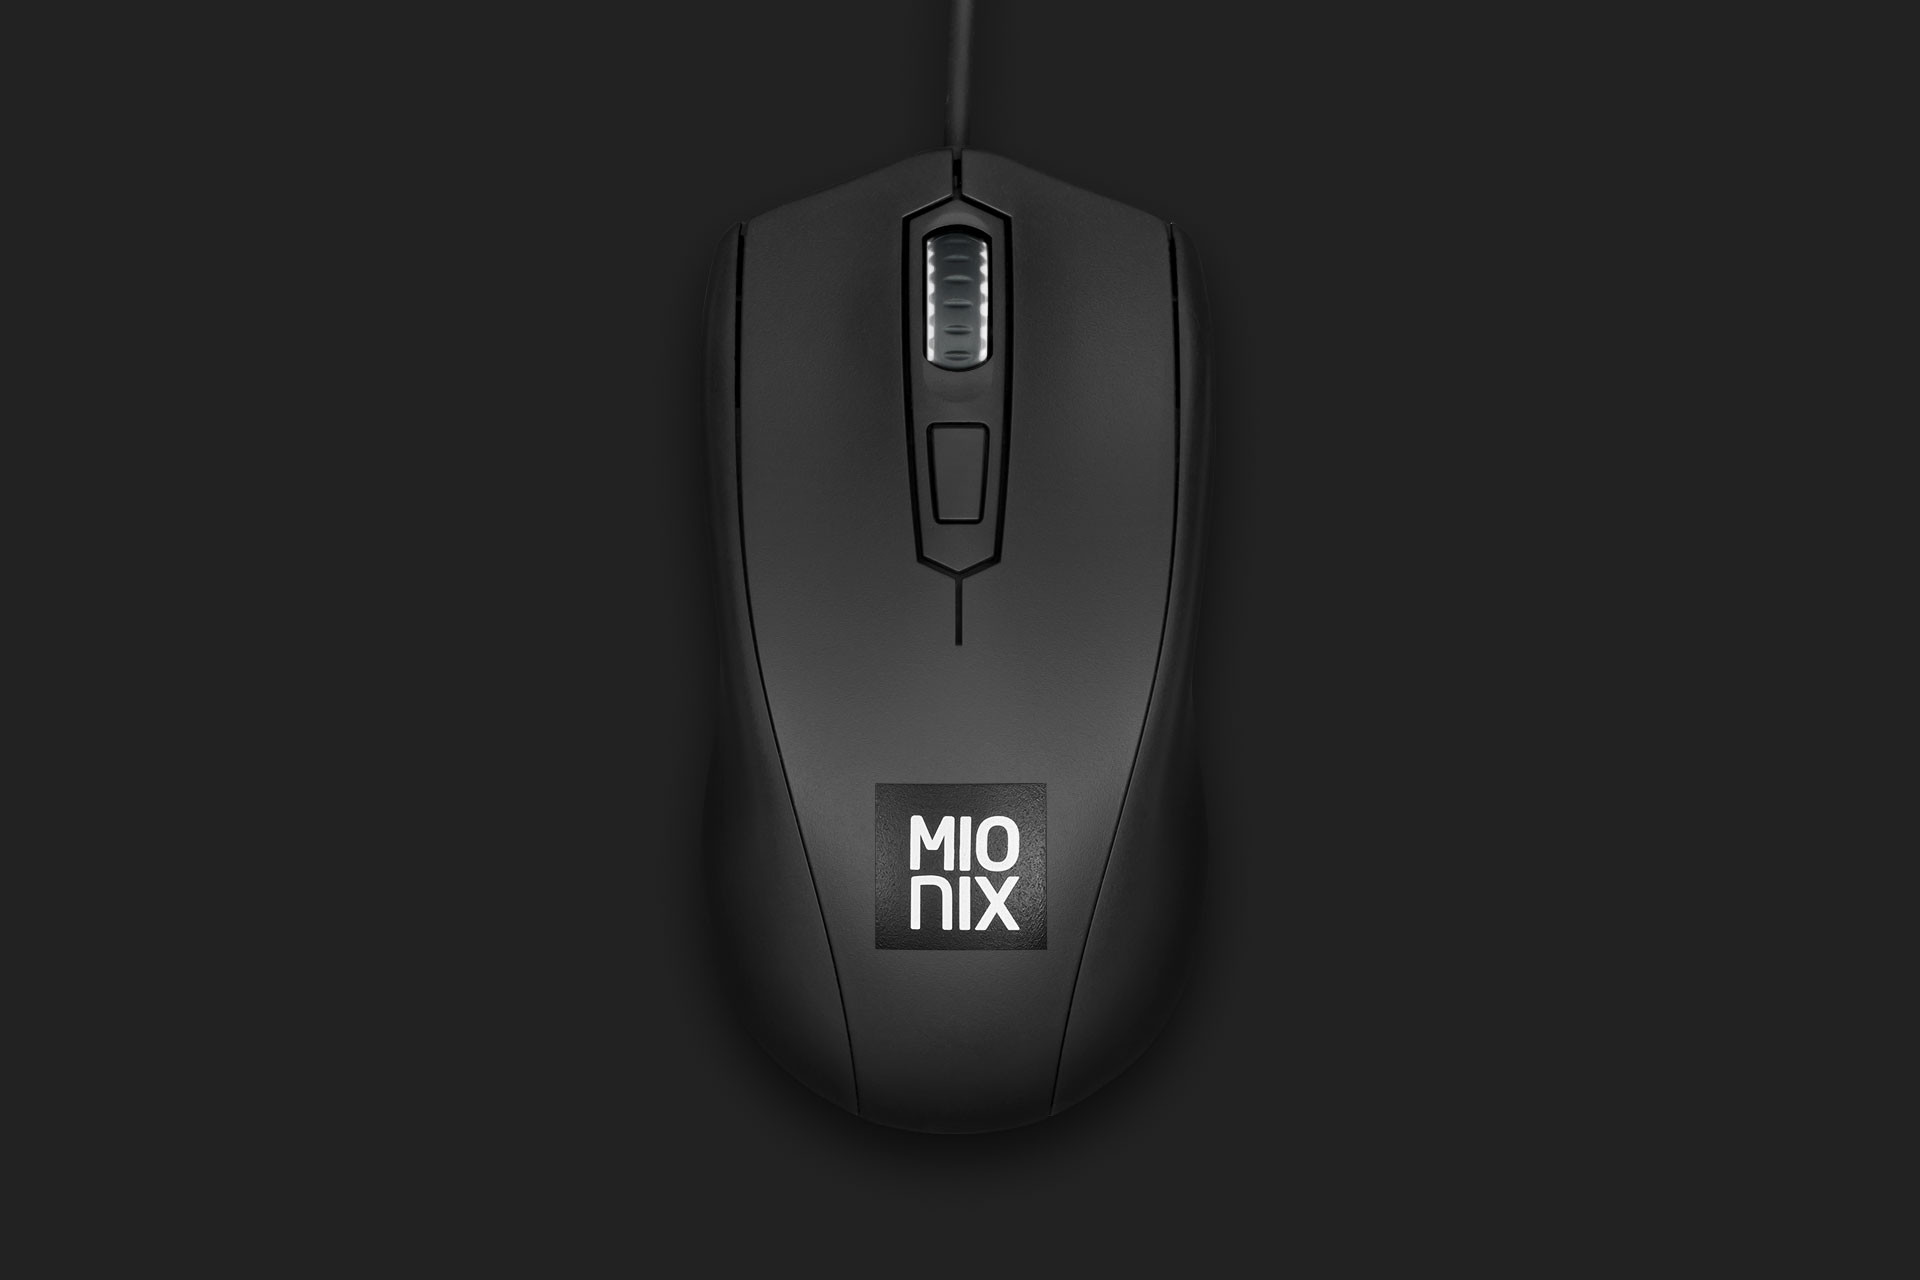 Gray Mionix Avior Shark Fin Ambidextrous Optical Gaming Mouse